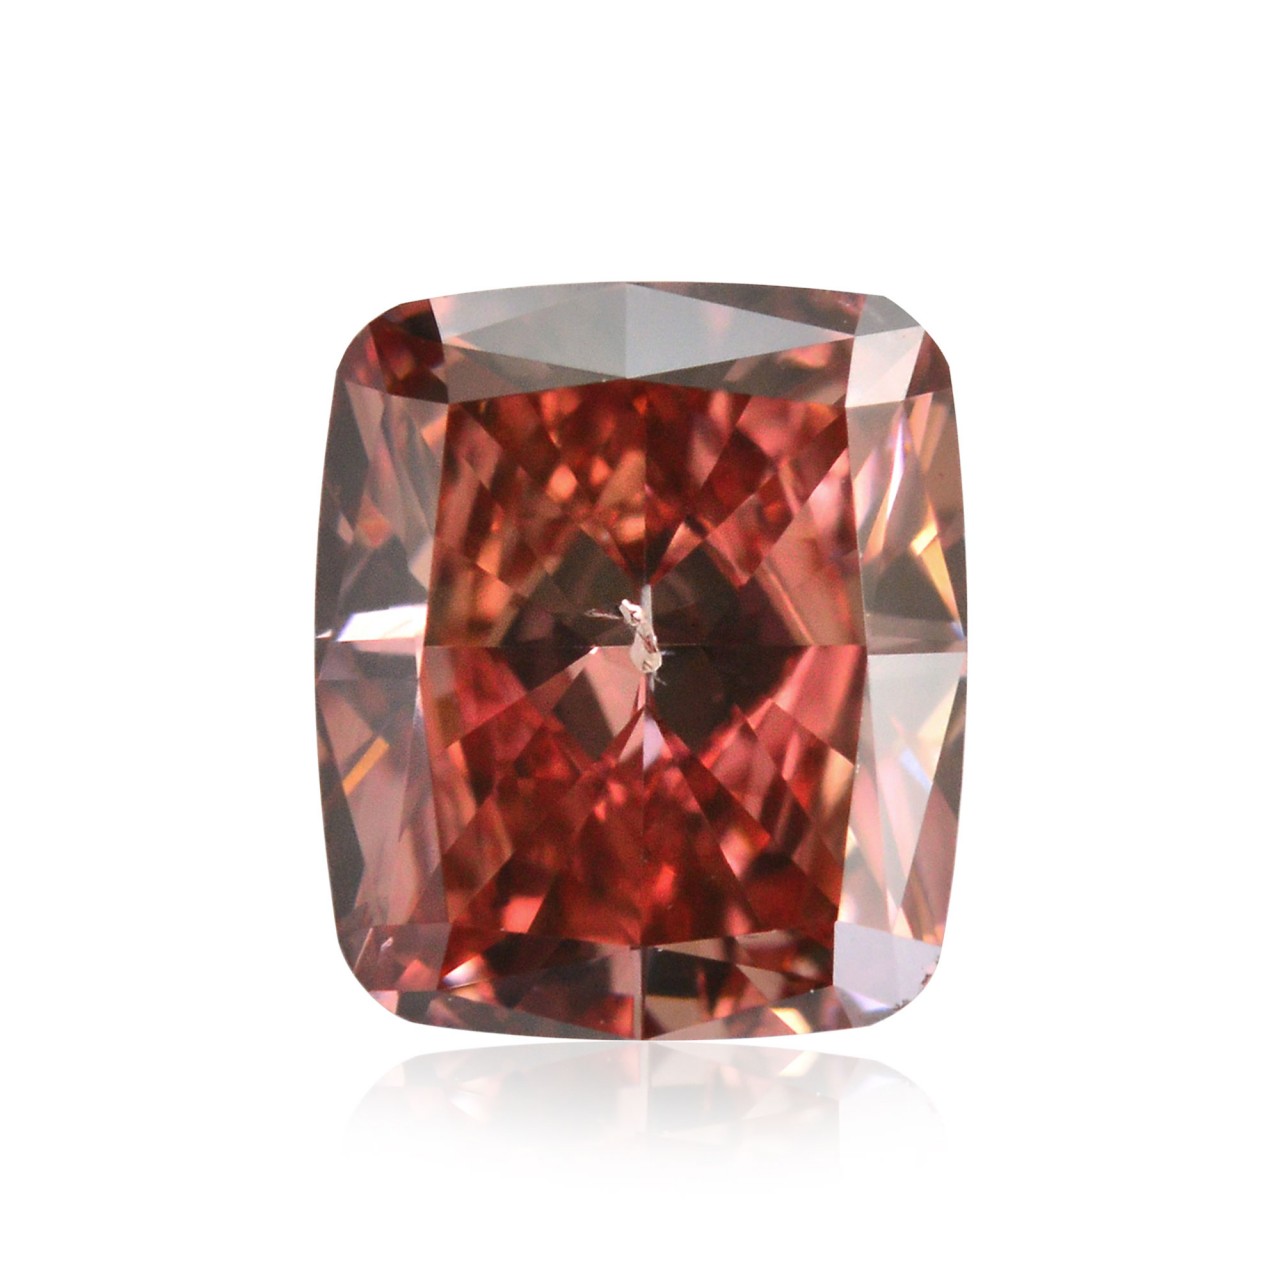 0.29 carat, Fancy Red Diamond, Cushion Shape, SI2 Clarity, GIA, SKU 88113.